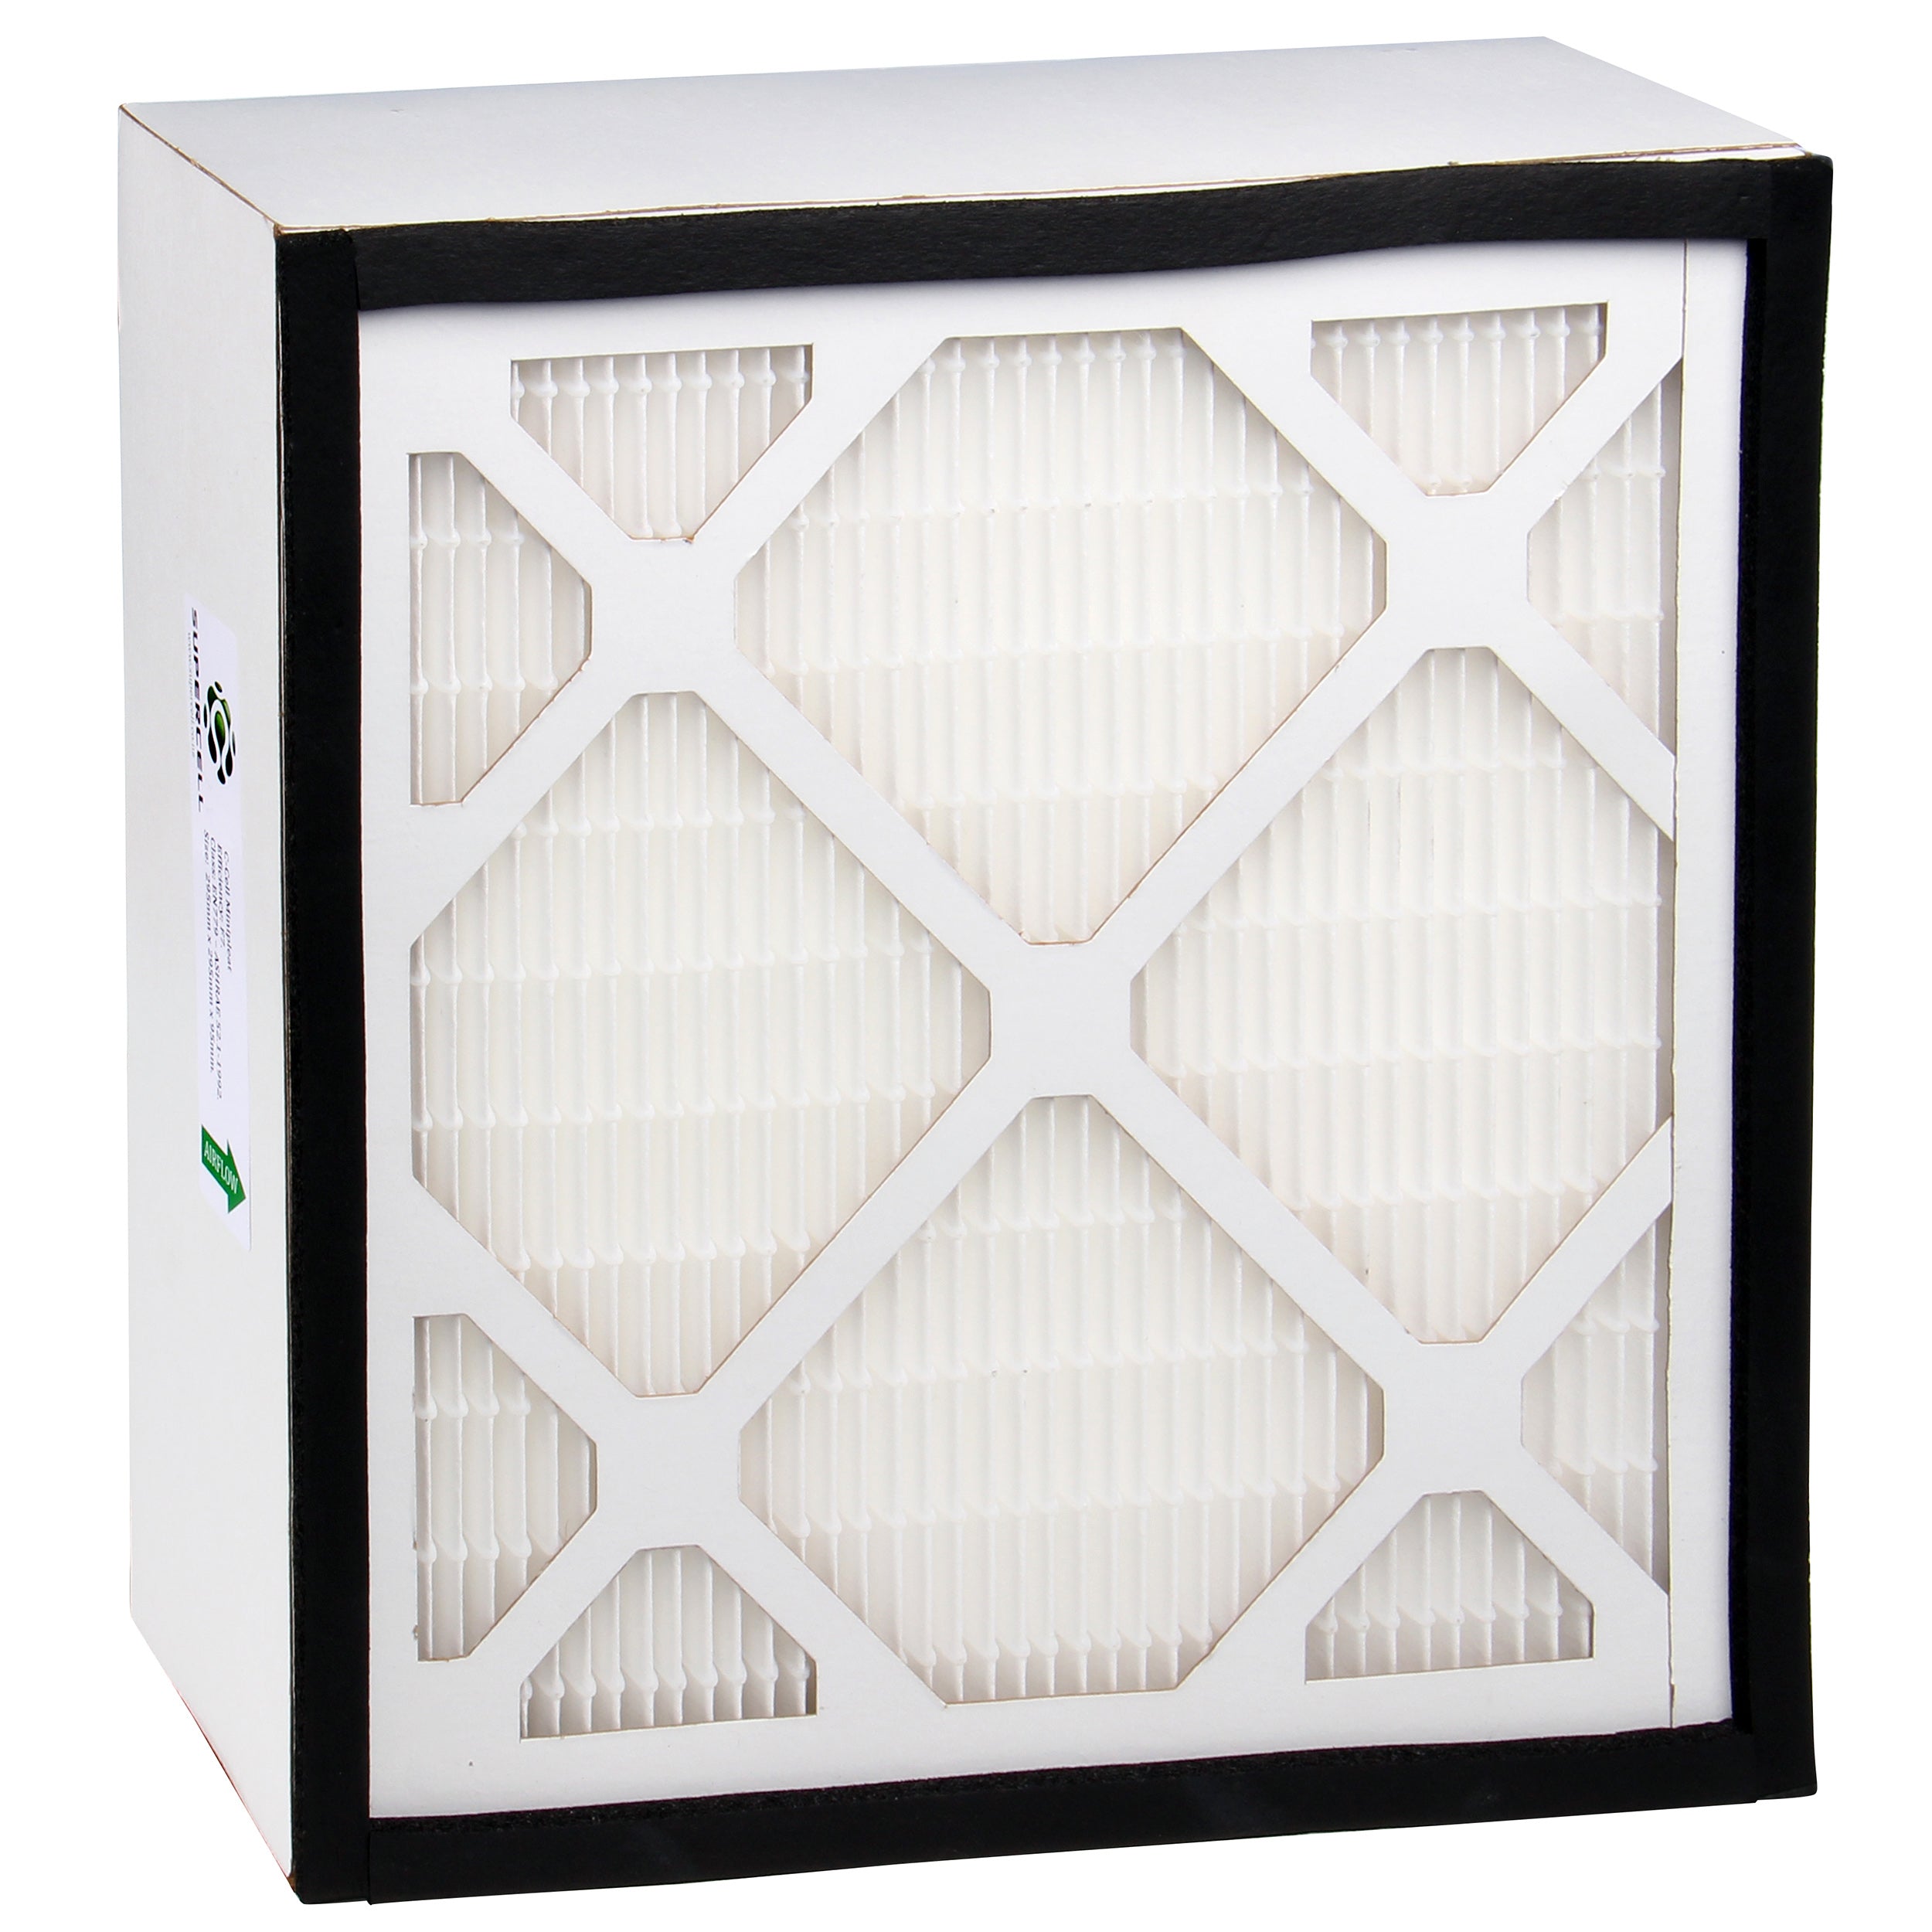 I-Vent ventilation system filter $65